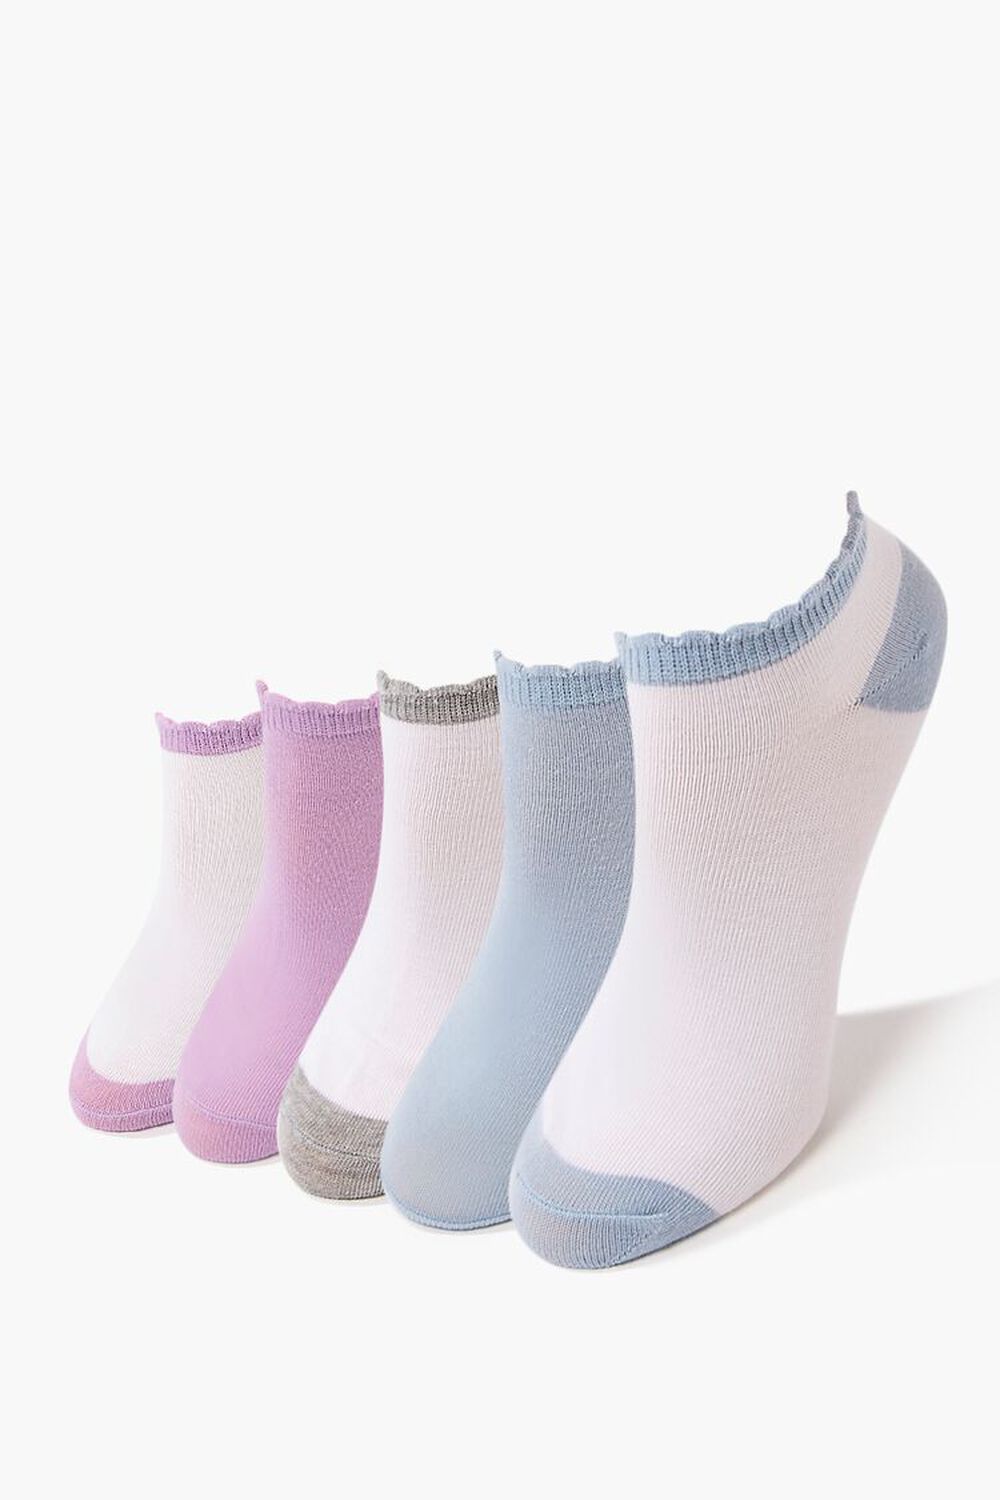 Scalloped Ankle Sock Set - 5 pack, image 1